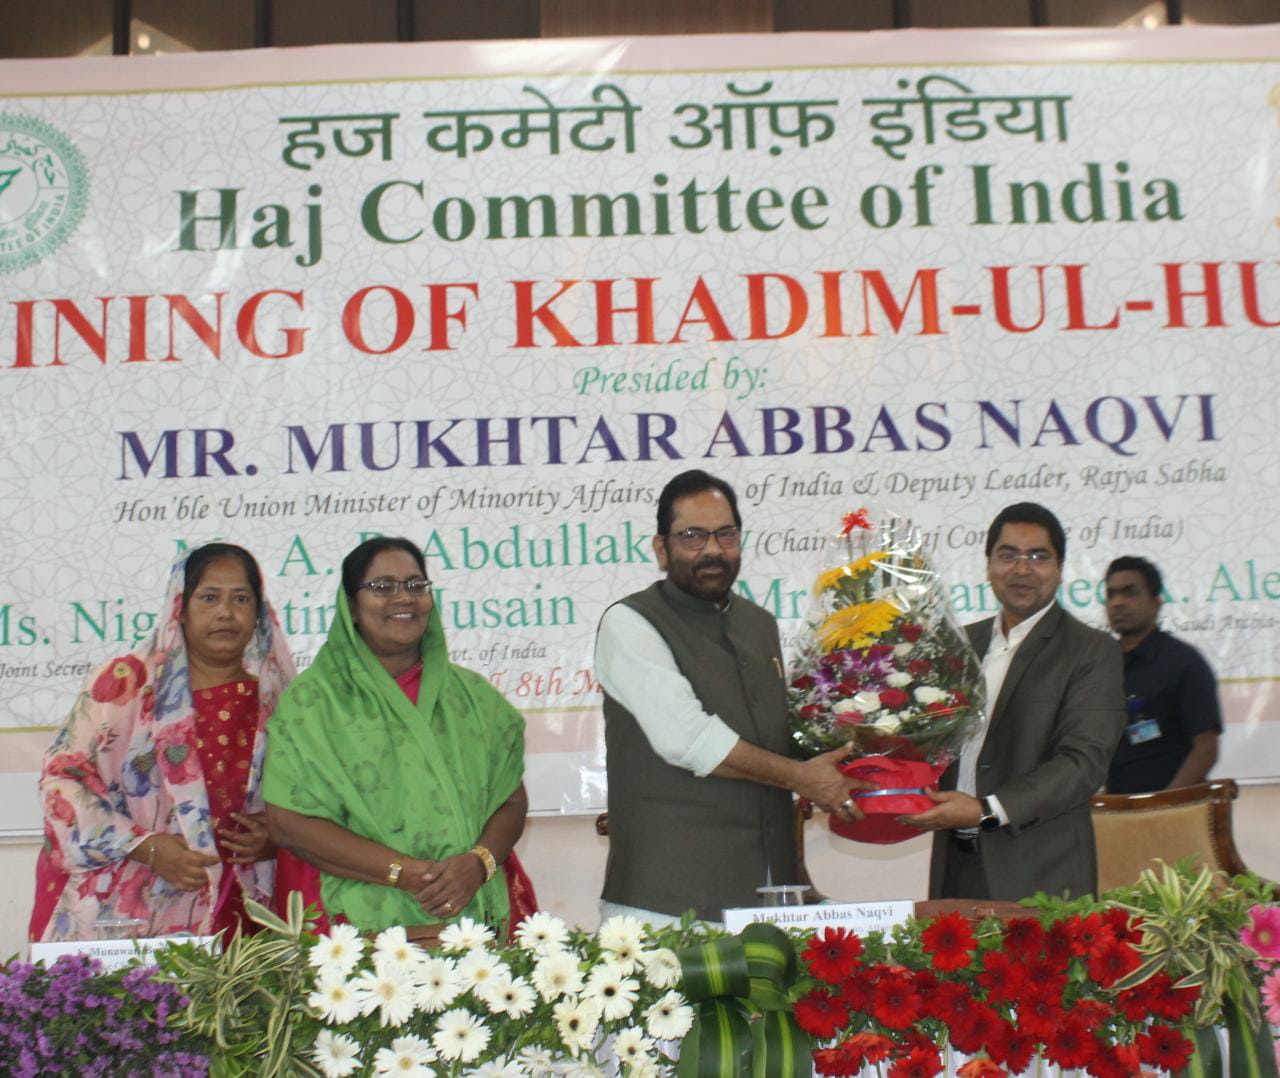 Union Minority Affairs Minister inaugurates two-day training of ‘Khadim-ul-hujjaj’ at Haj House in Mumbai today